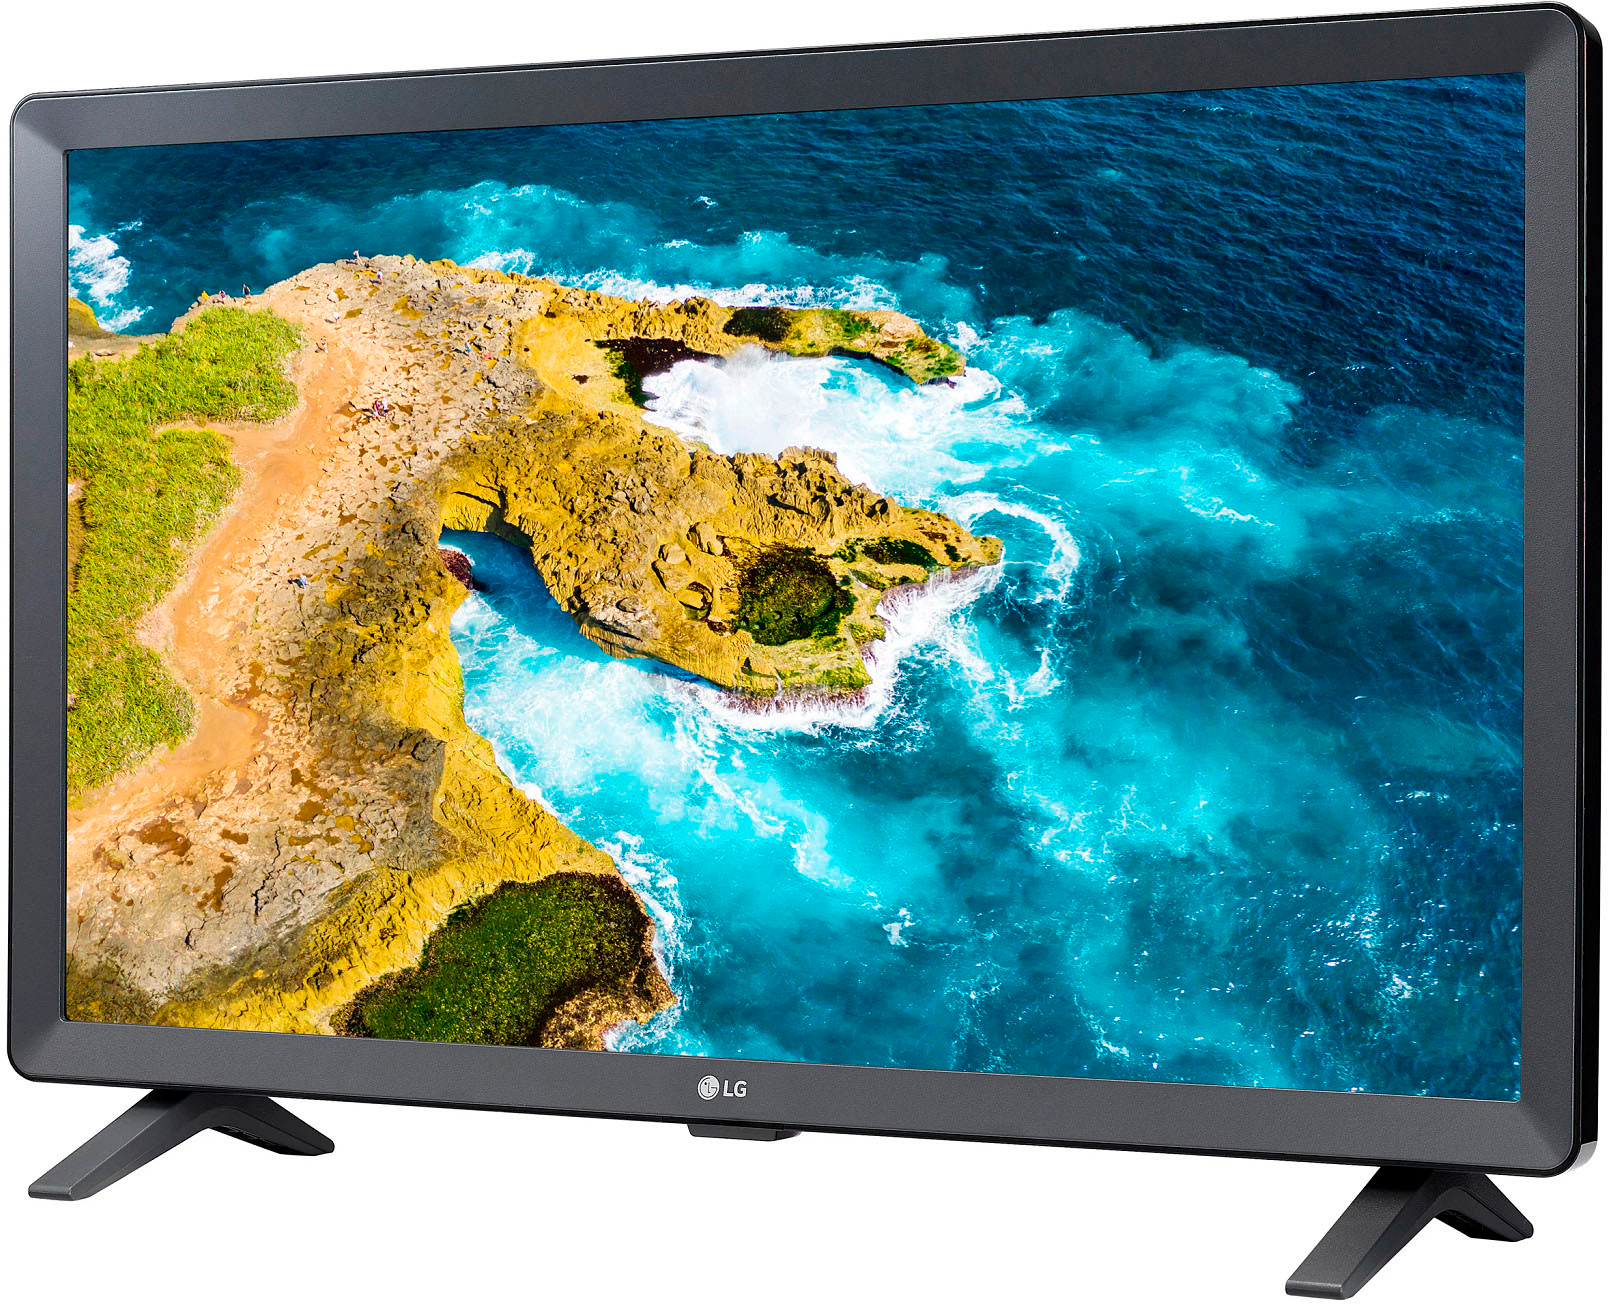 agitation svag gidsel LG 24” Class LED HD Smart TV with webOS 24LQ520S-PU - Best Buy